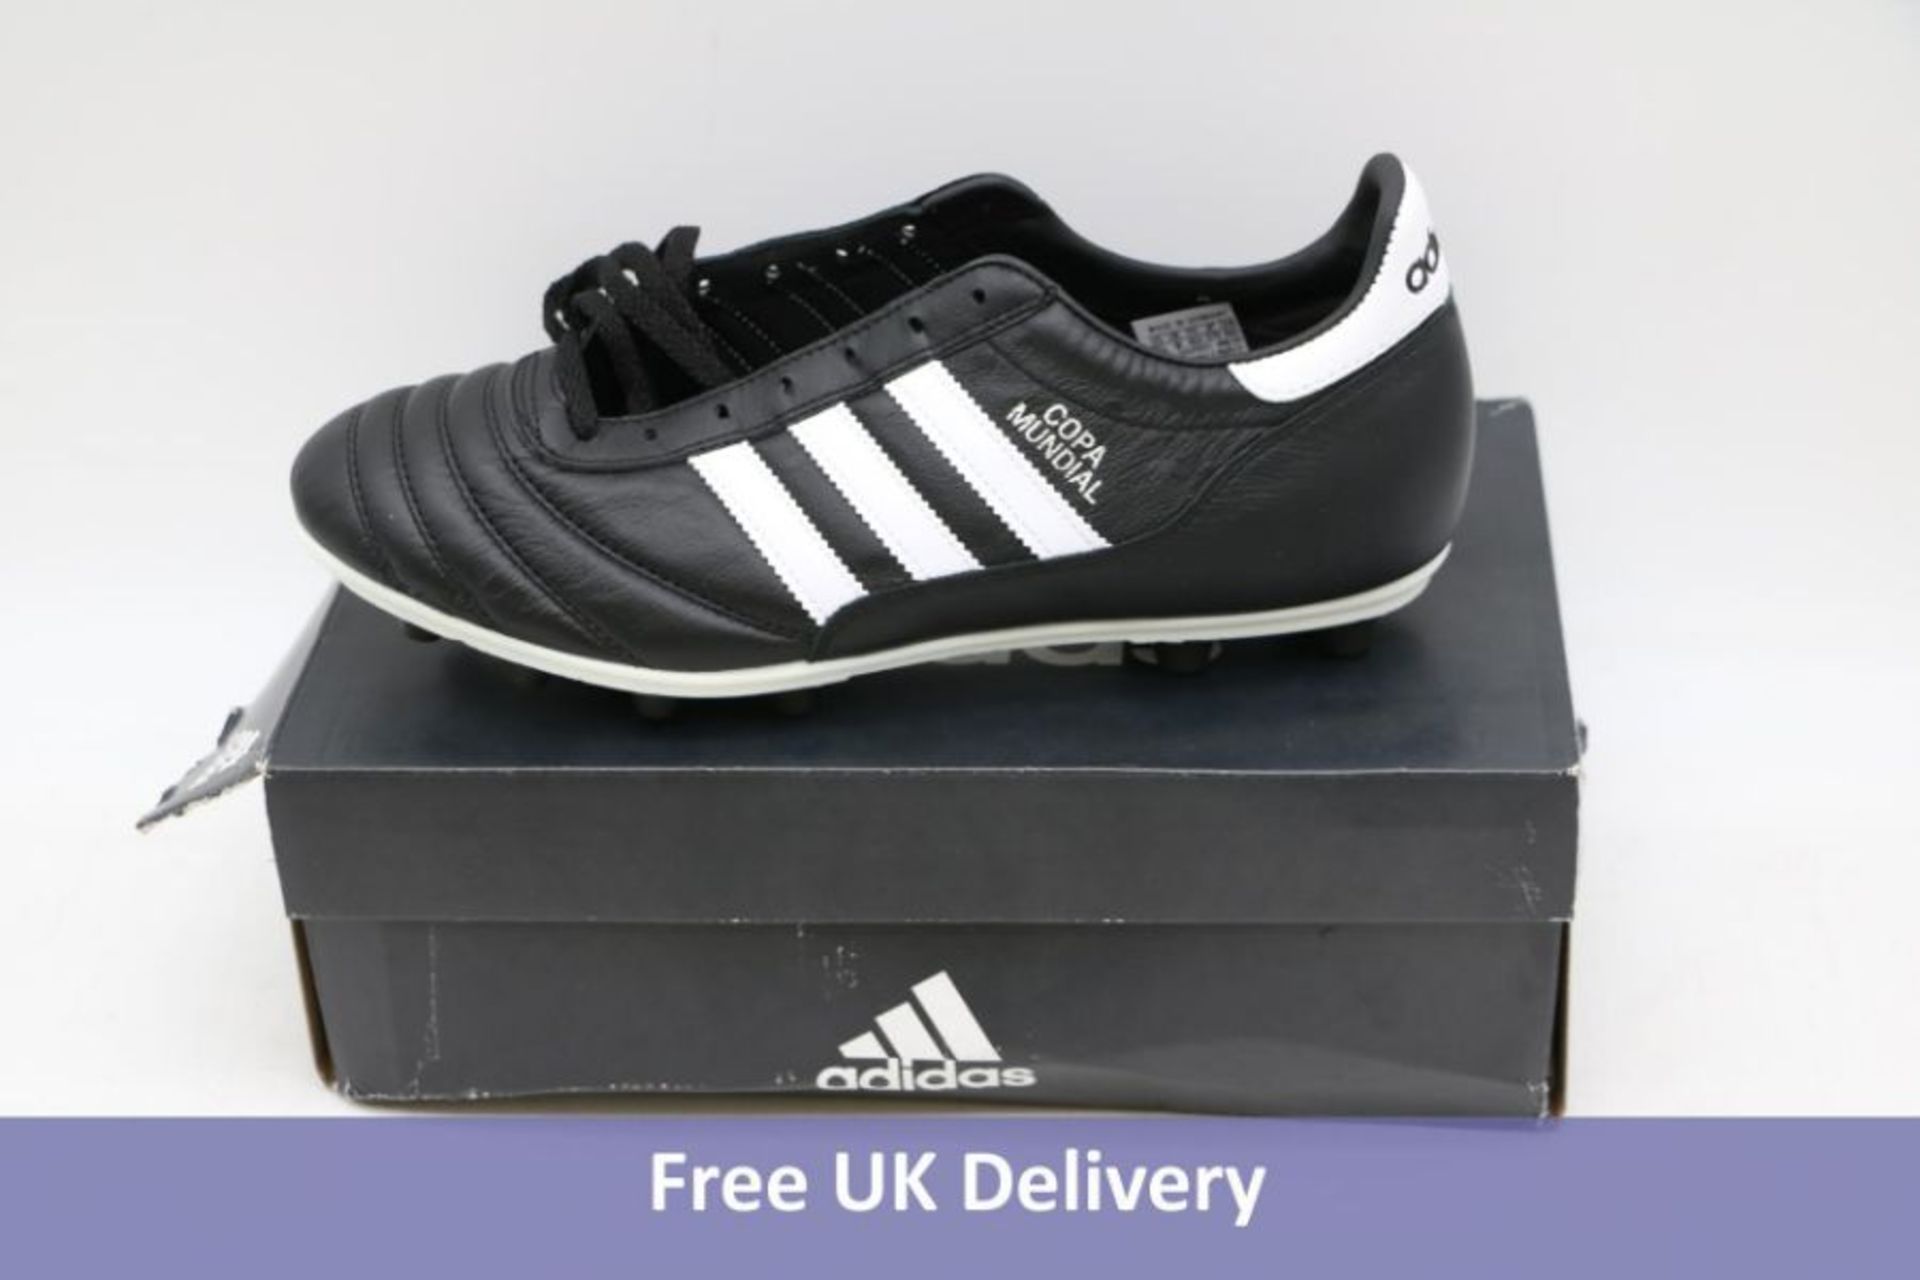 Adidas Copa Mundial Men's Football Boots, Black/White, UK 9